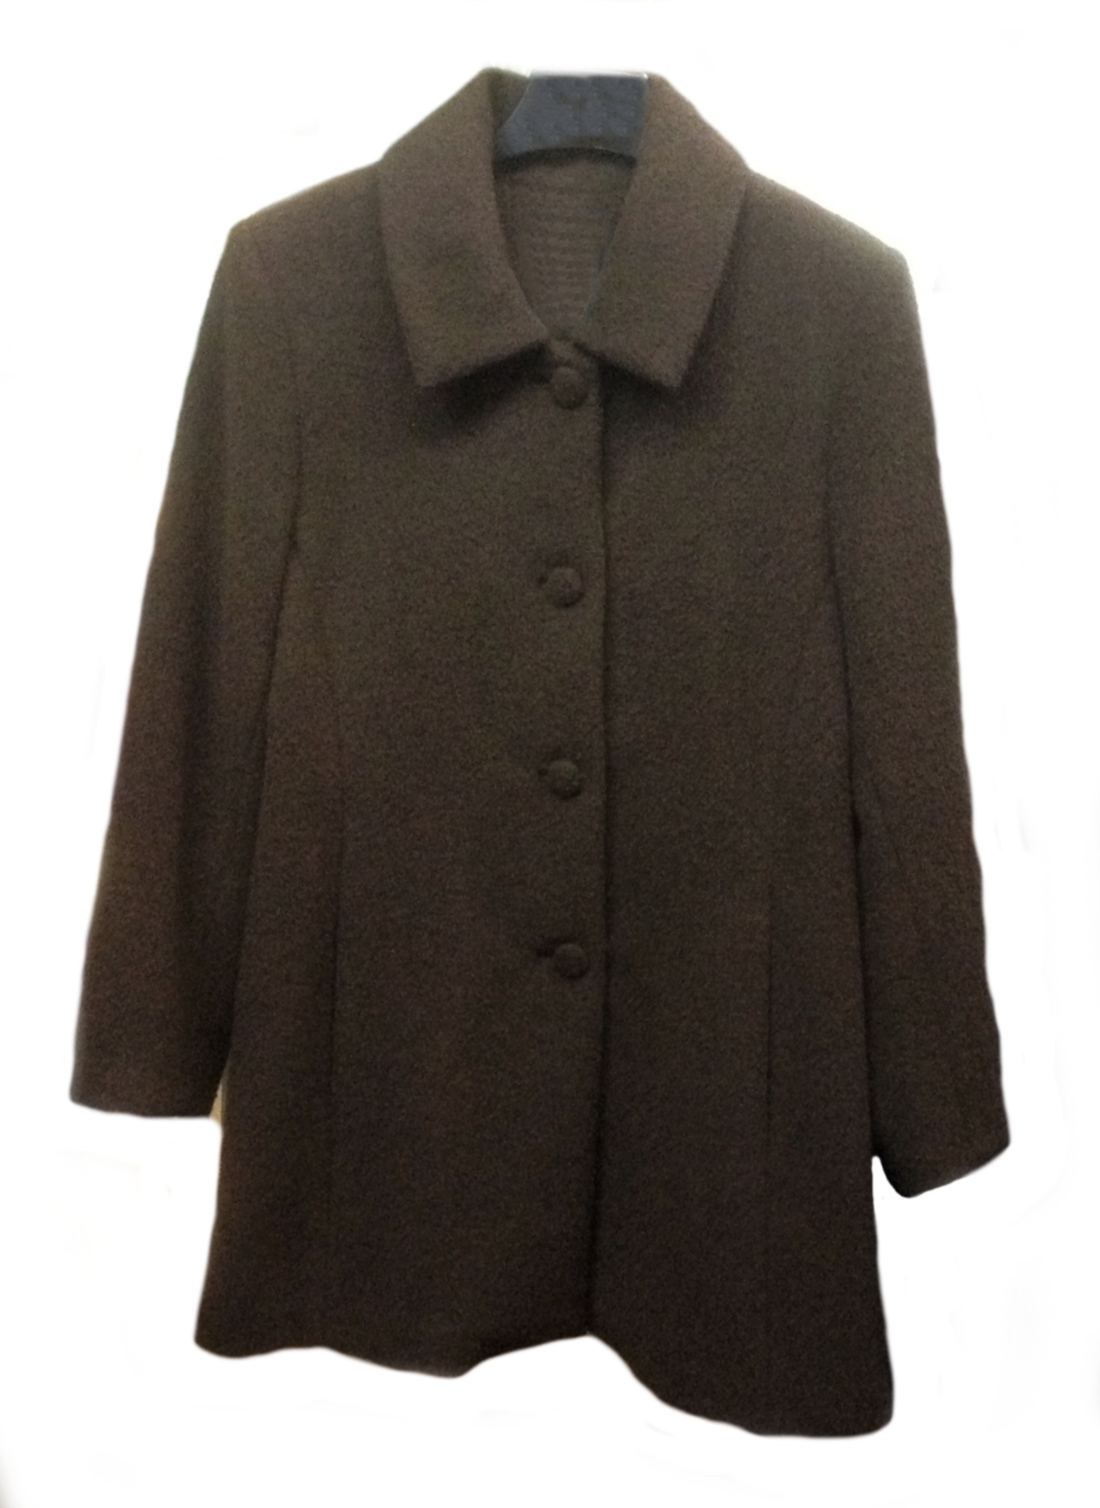 Women's winter coat, 100% pure alpaca wool, brown - Women's Clothing